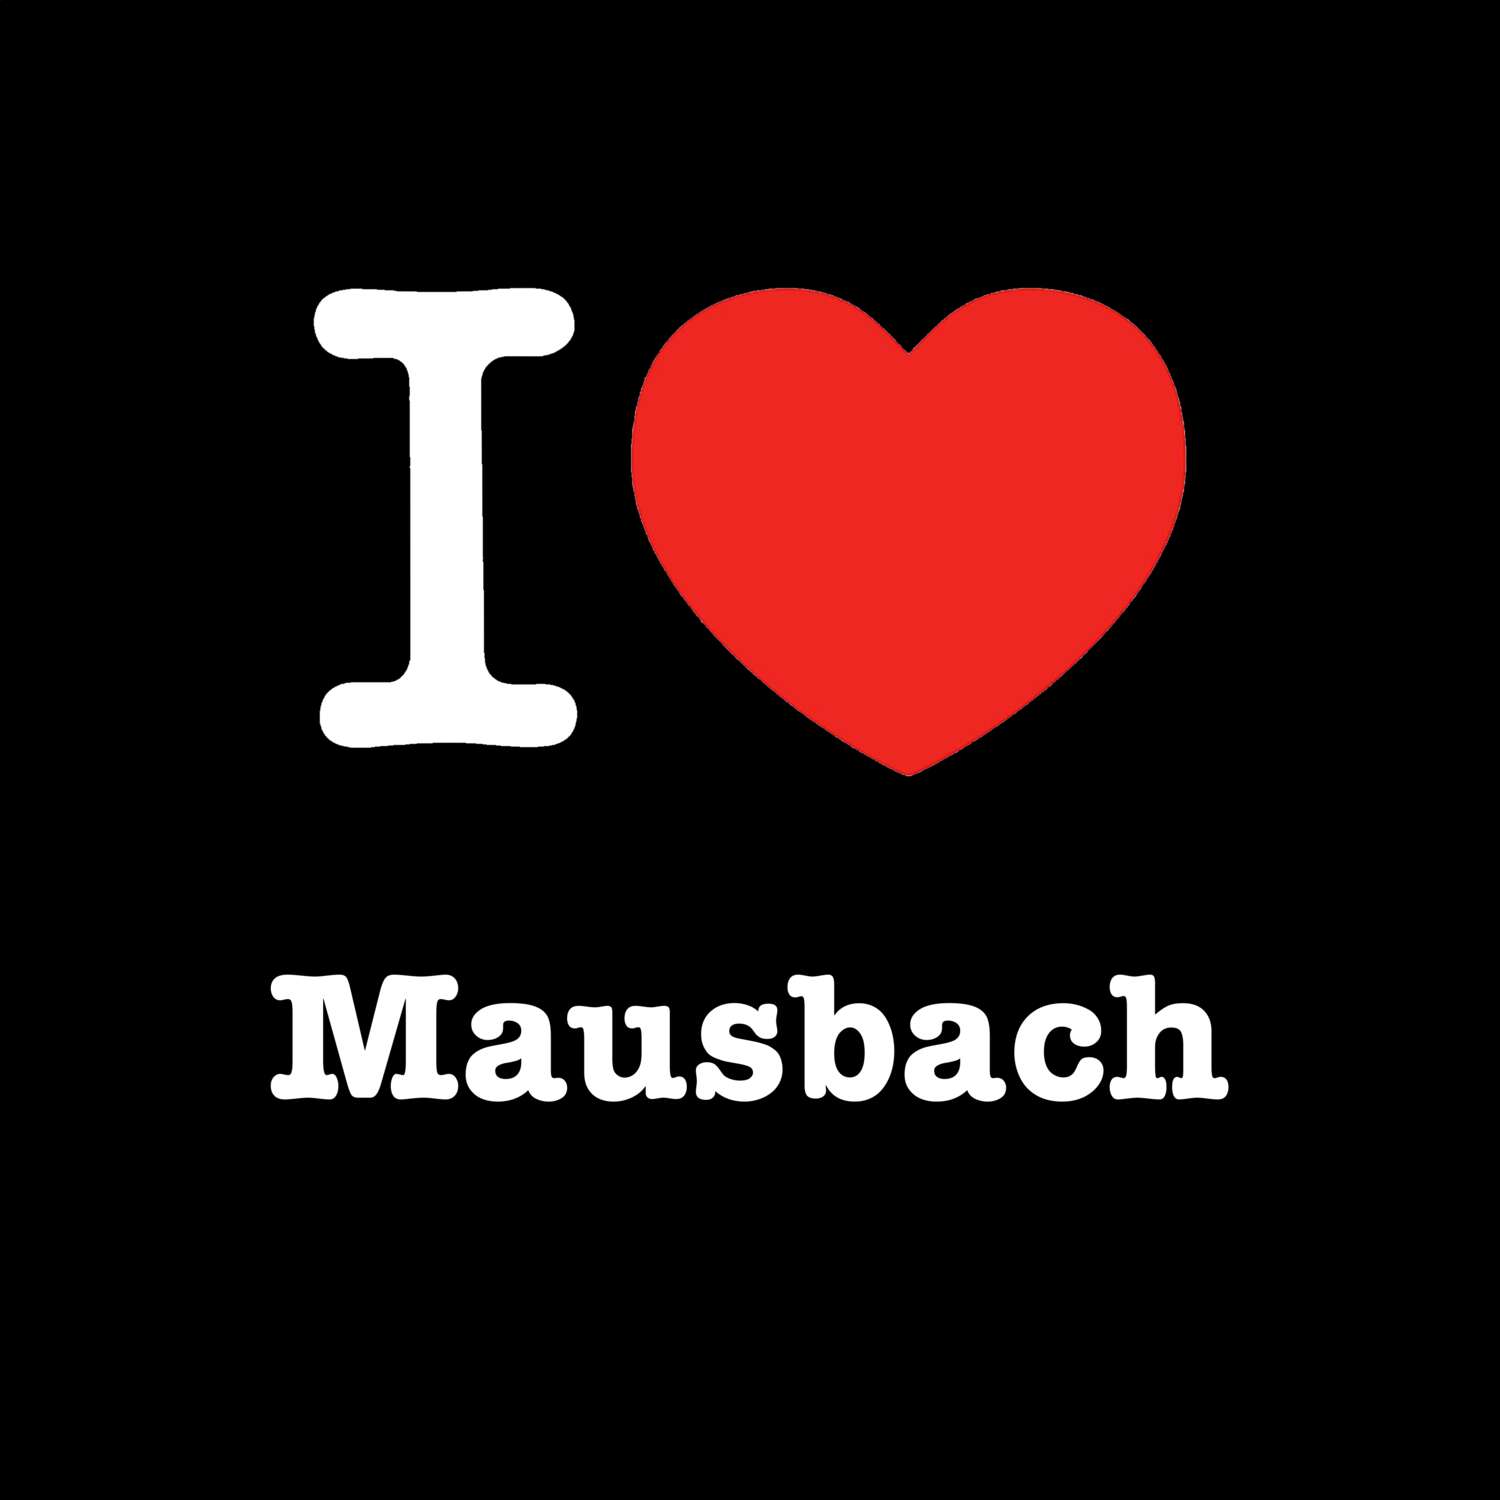 Mausbach T-Shirt »I love«